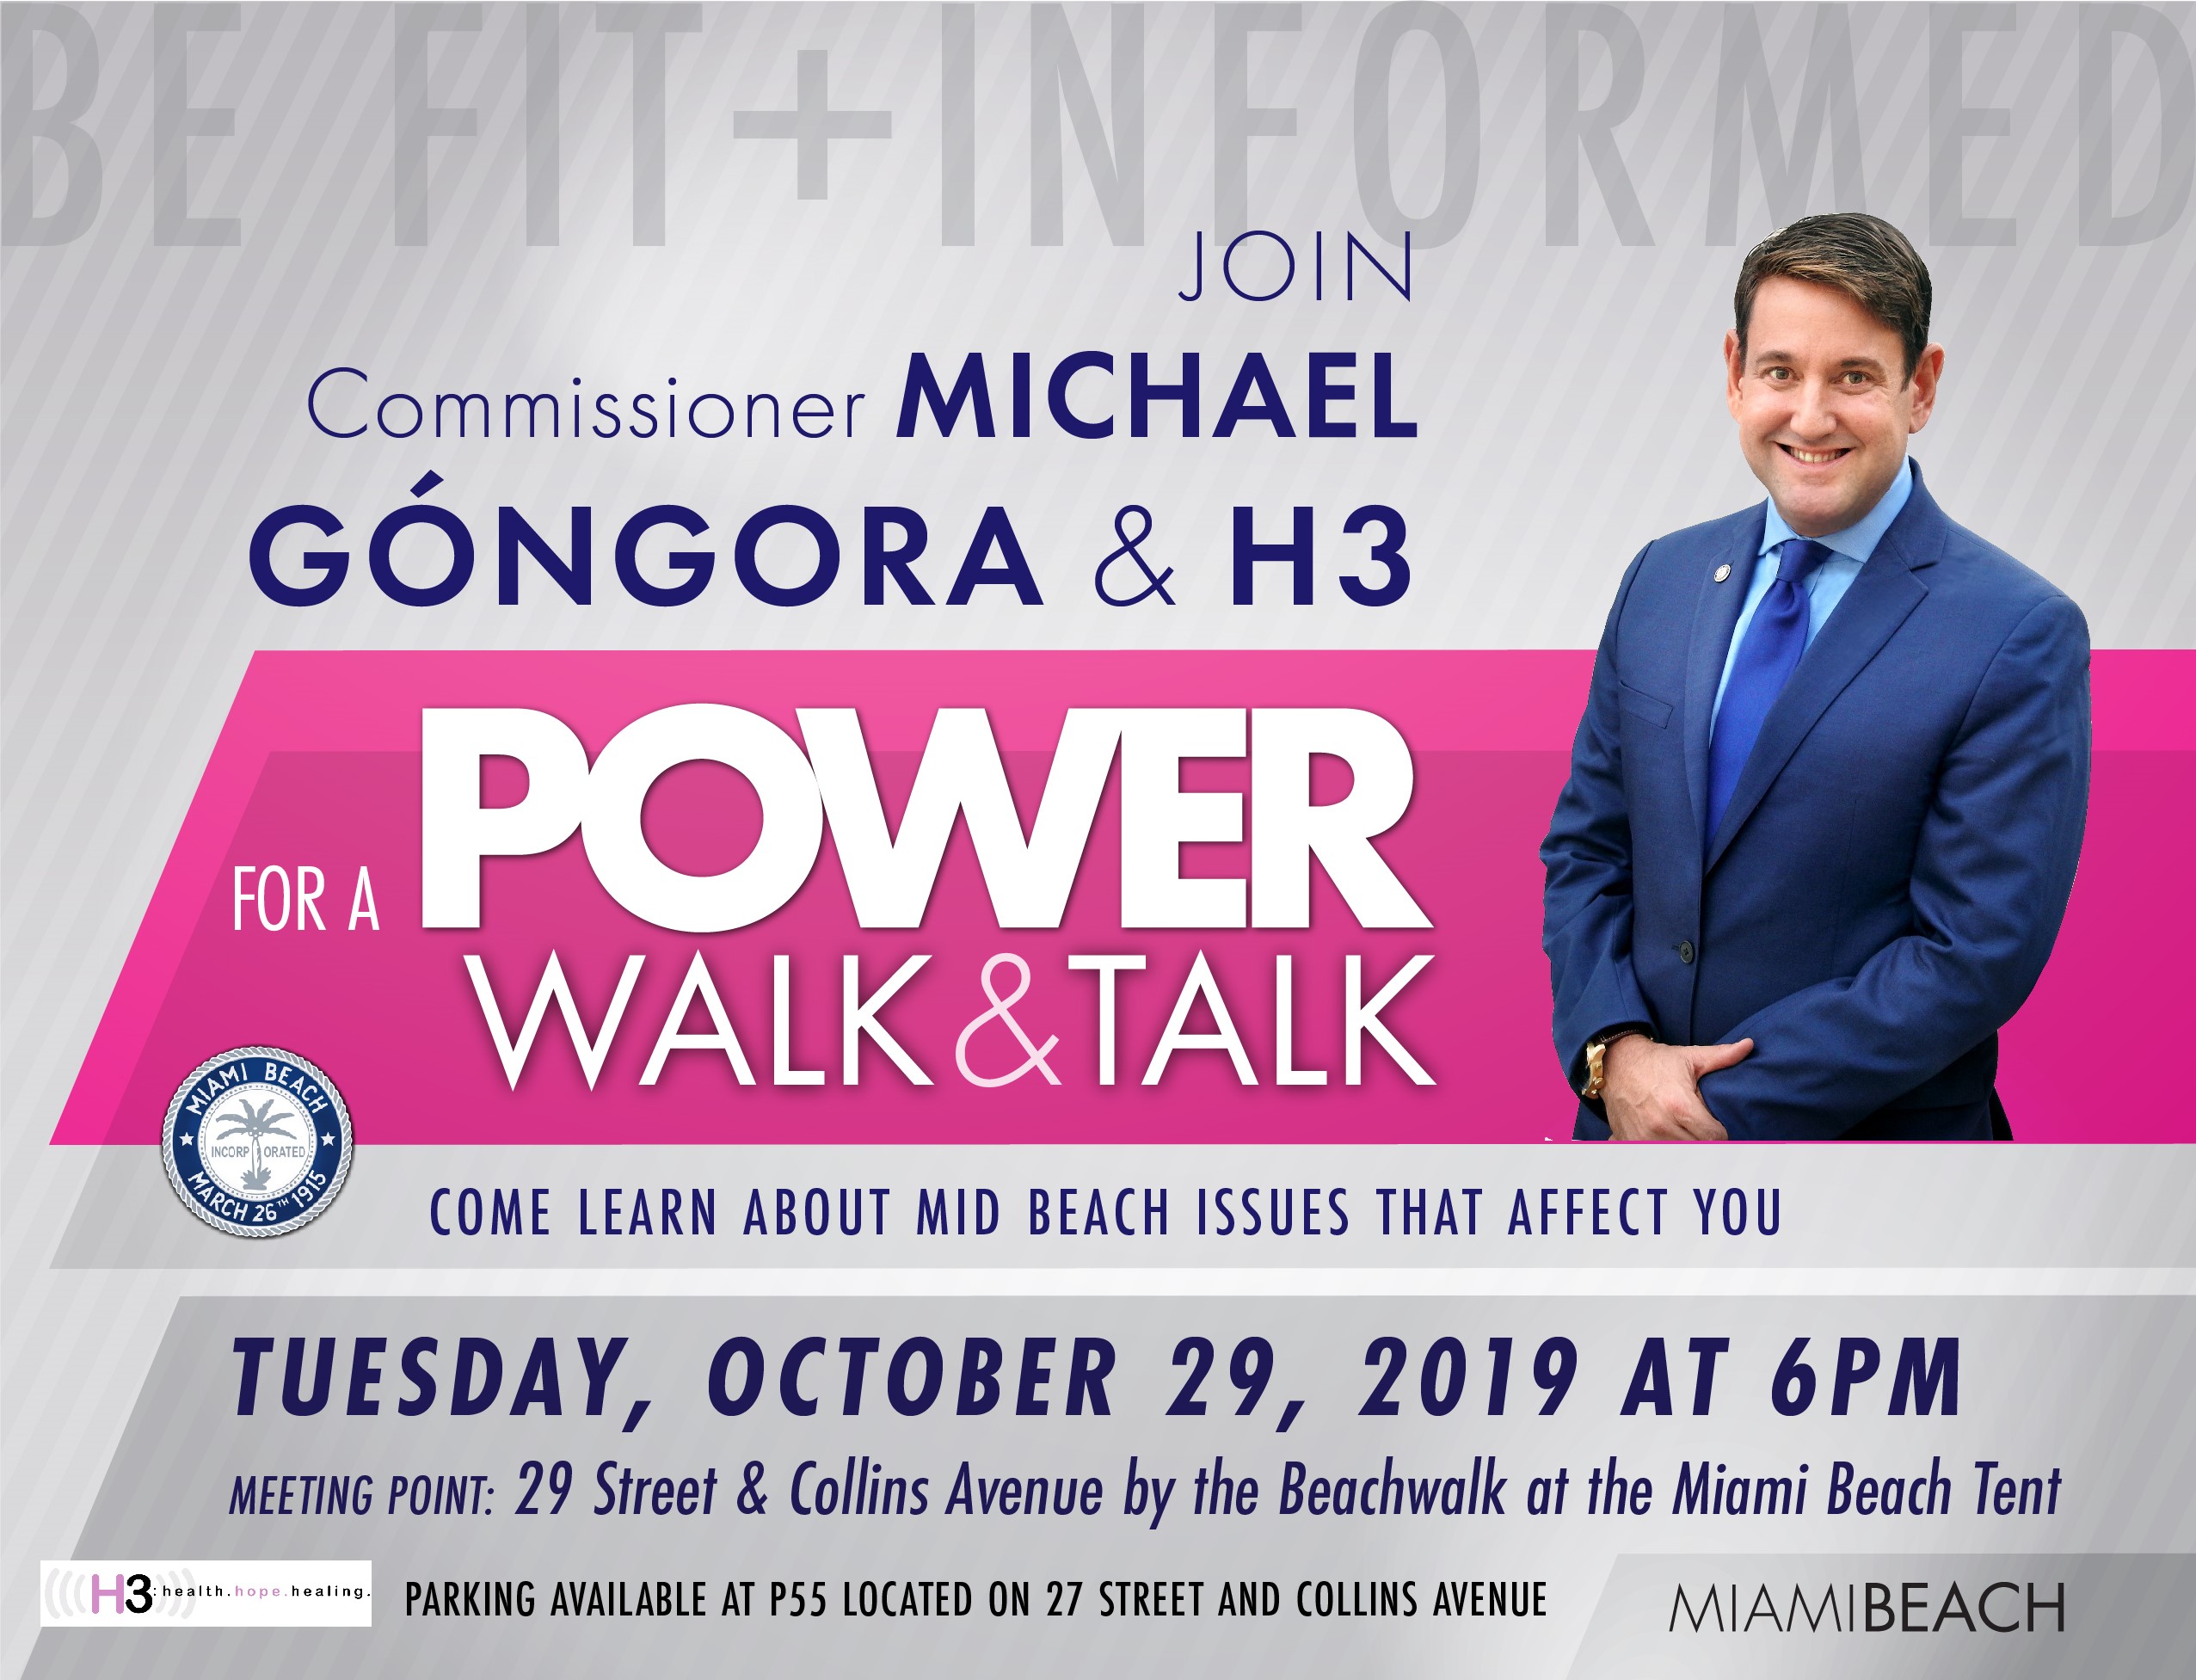 Power Walk & Talk with Commissioner Michael Góngora & H3